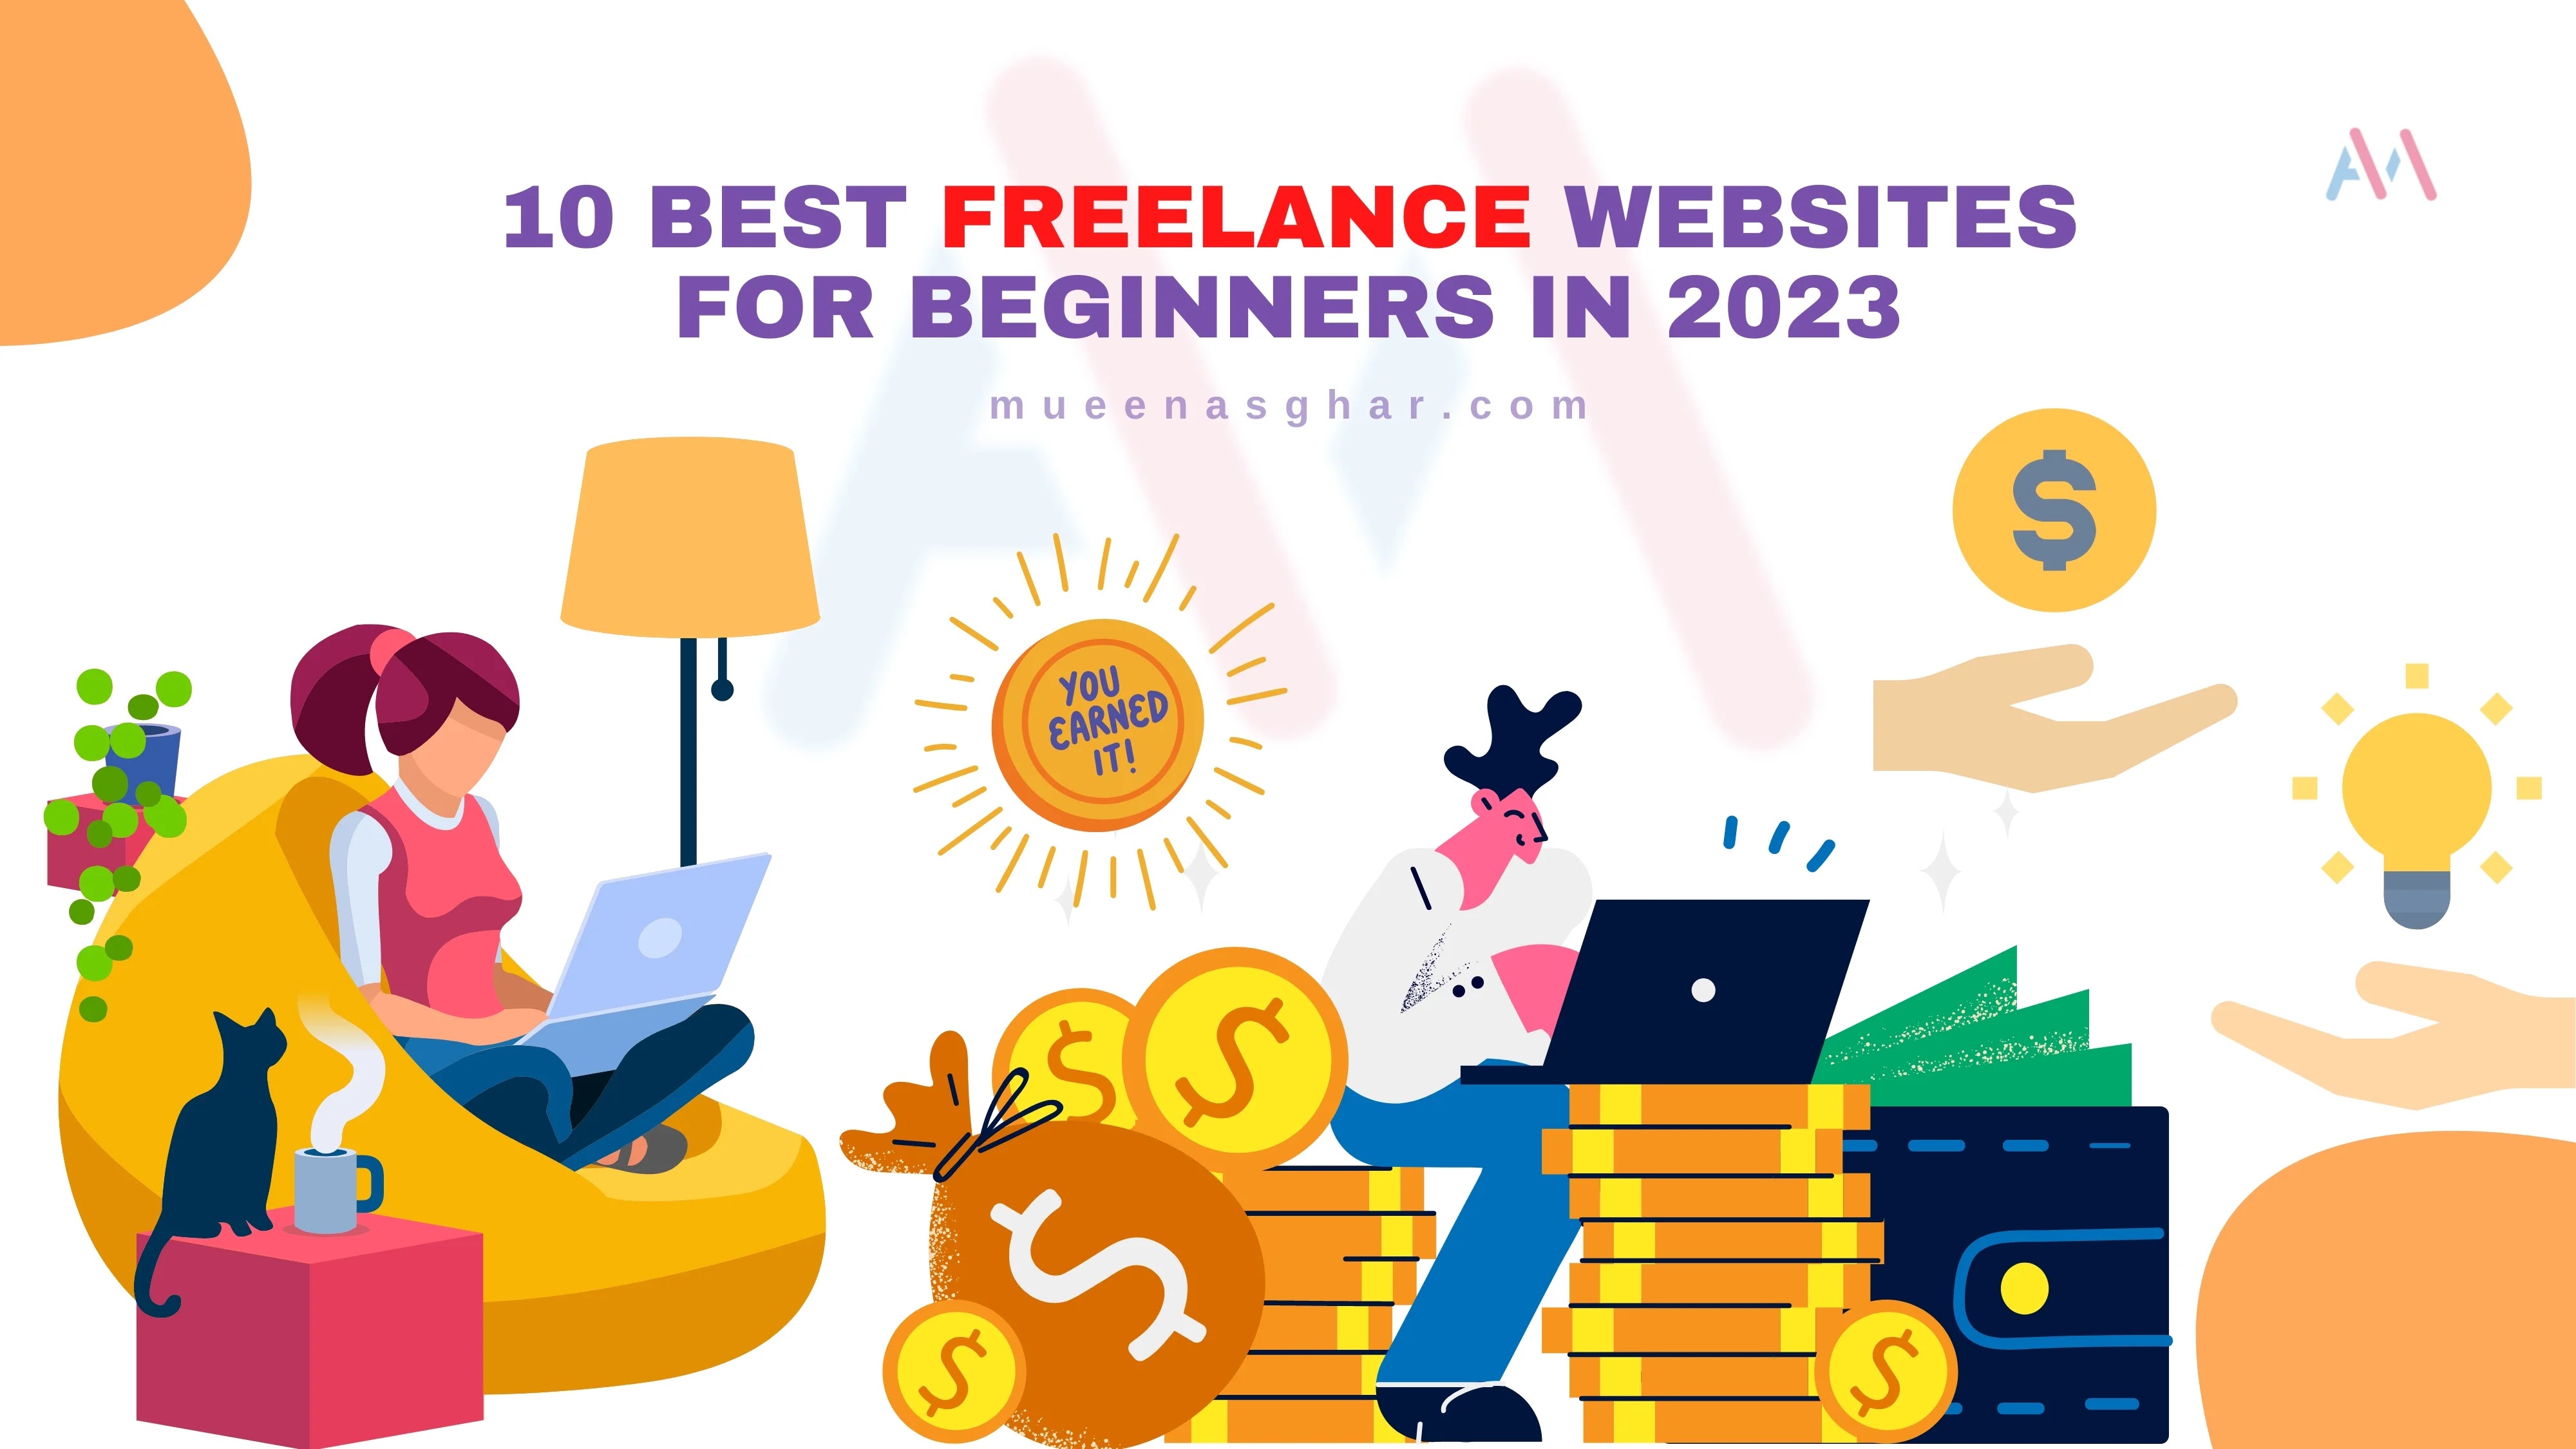 10 Best Freelance Websites for Beginners in 2023